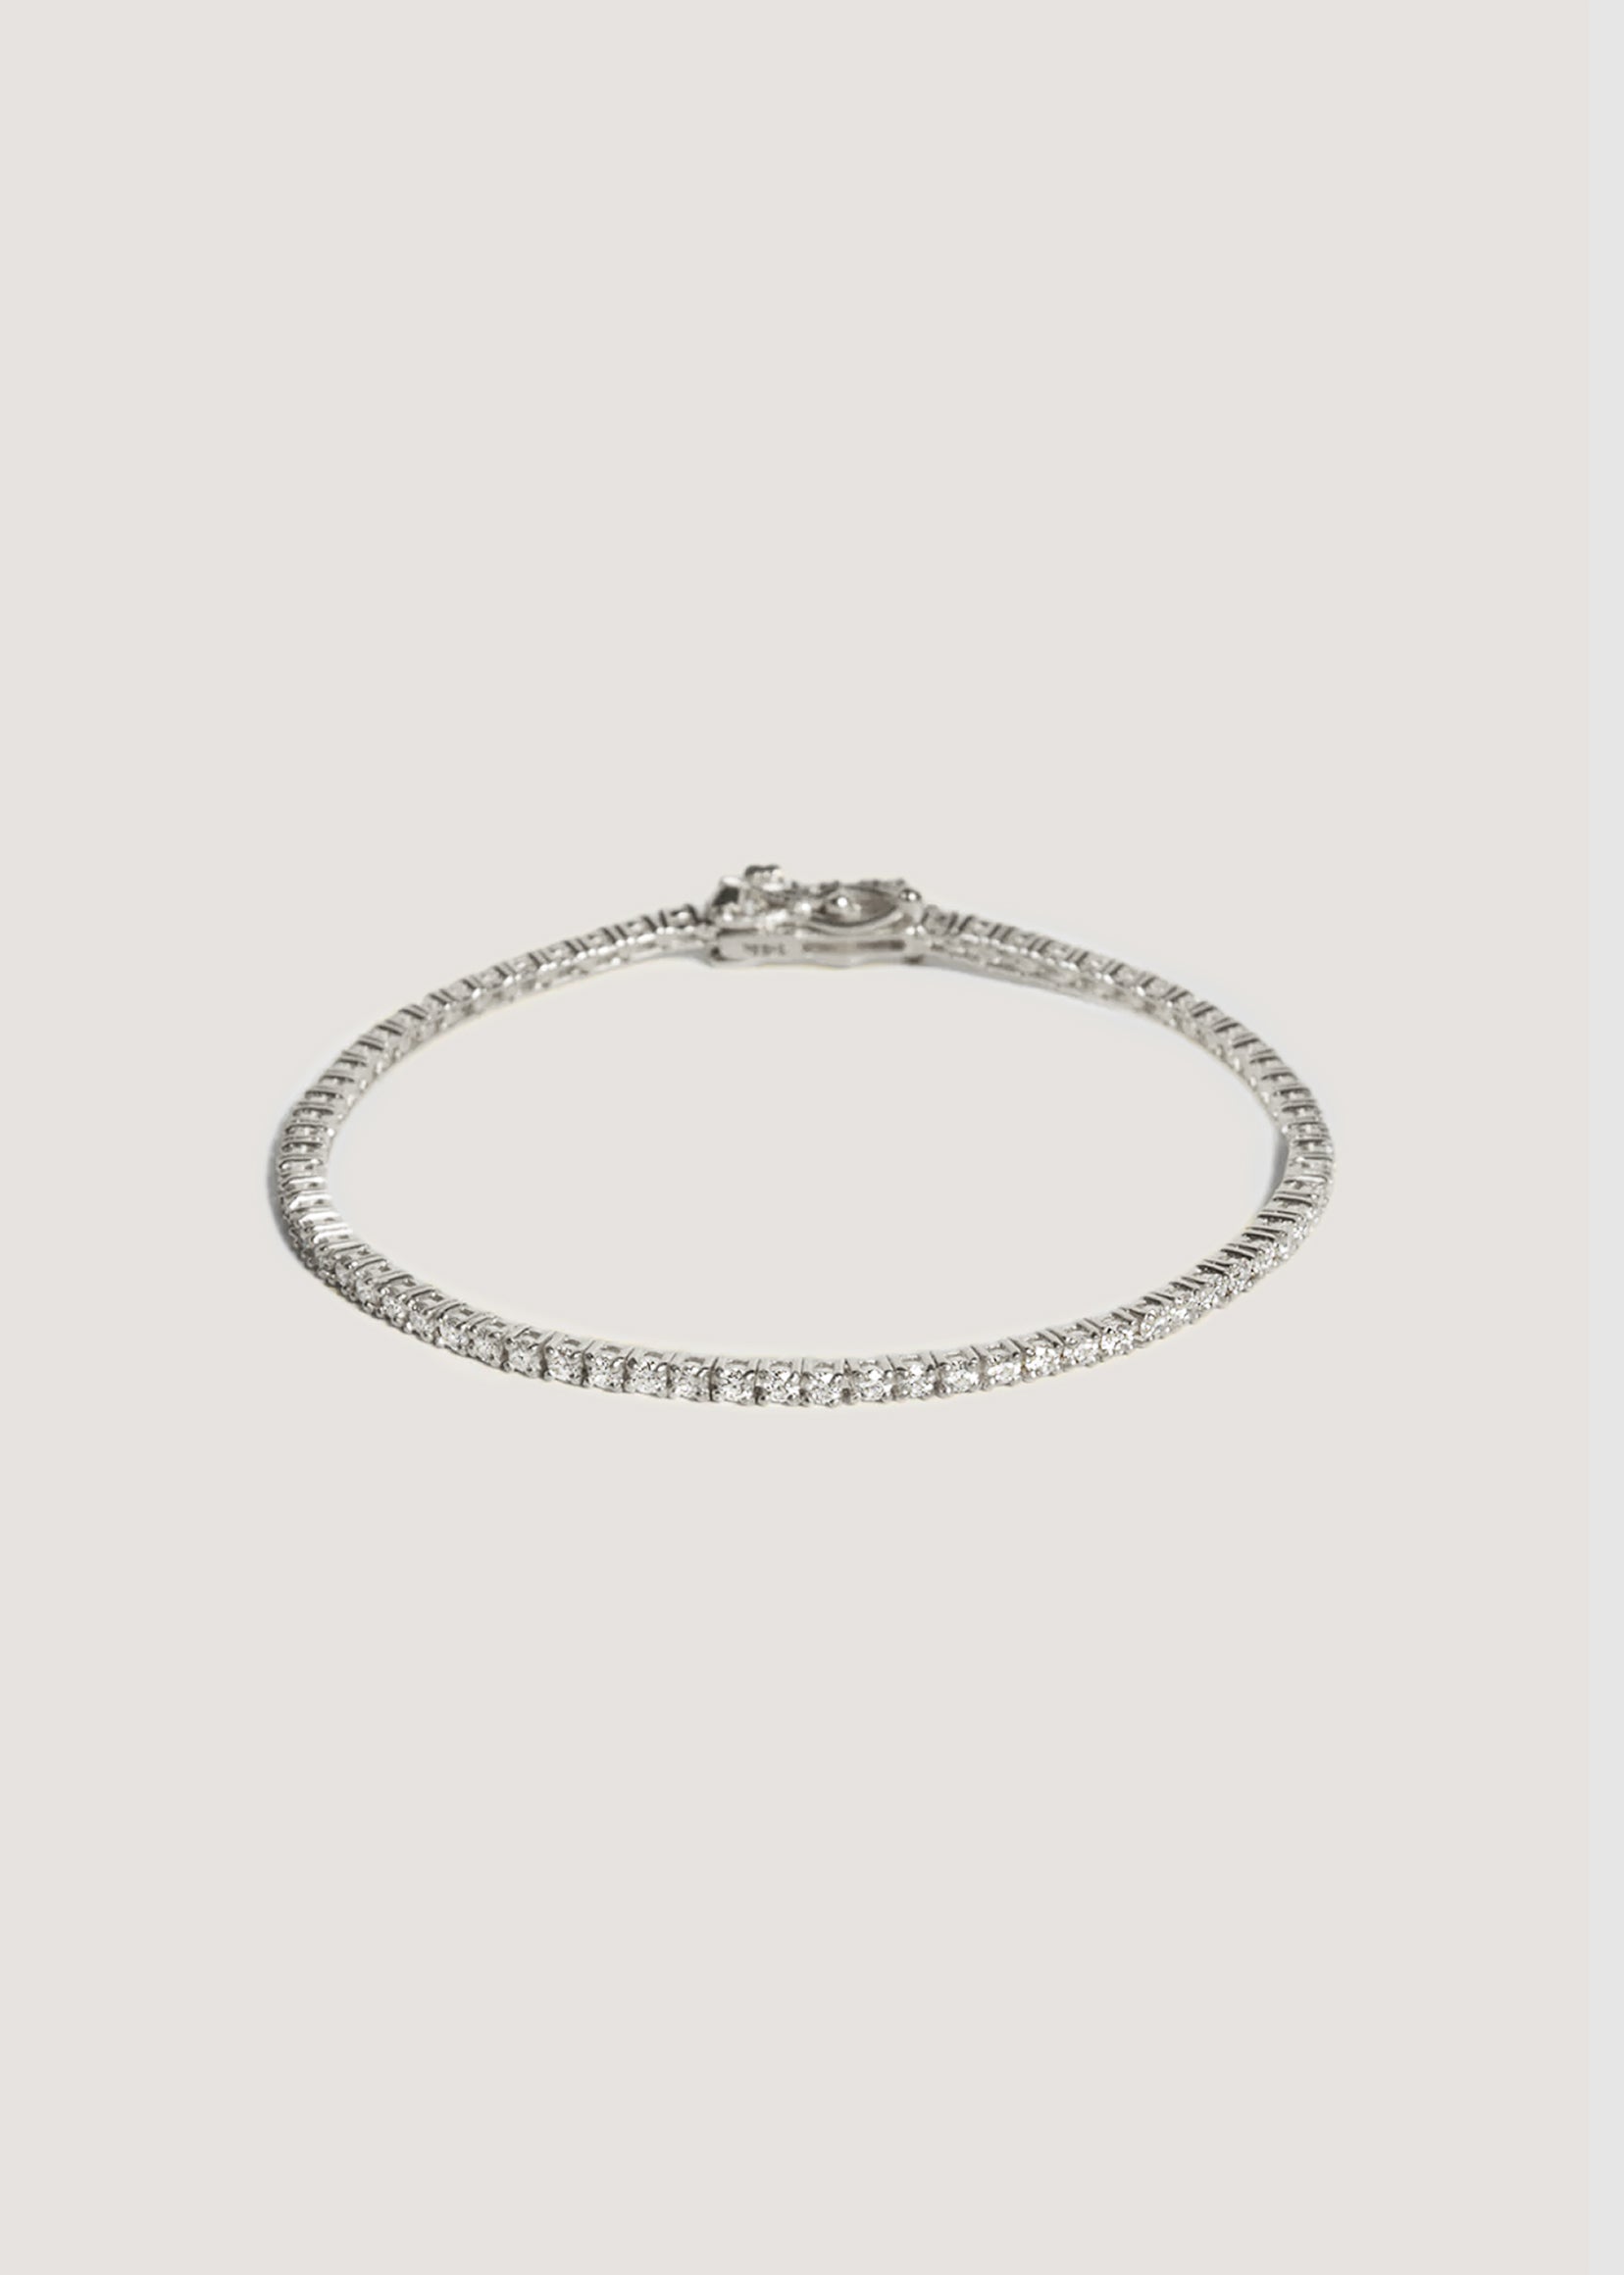 alt="White Gold Diana Diamond Tennis Bracelet"